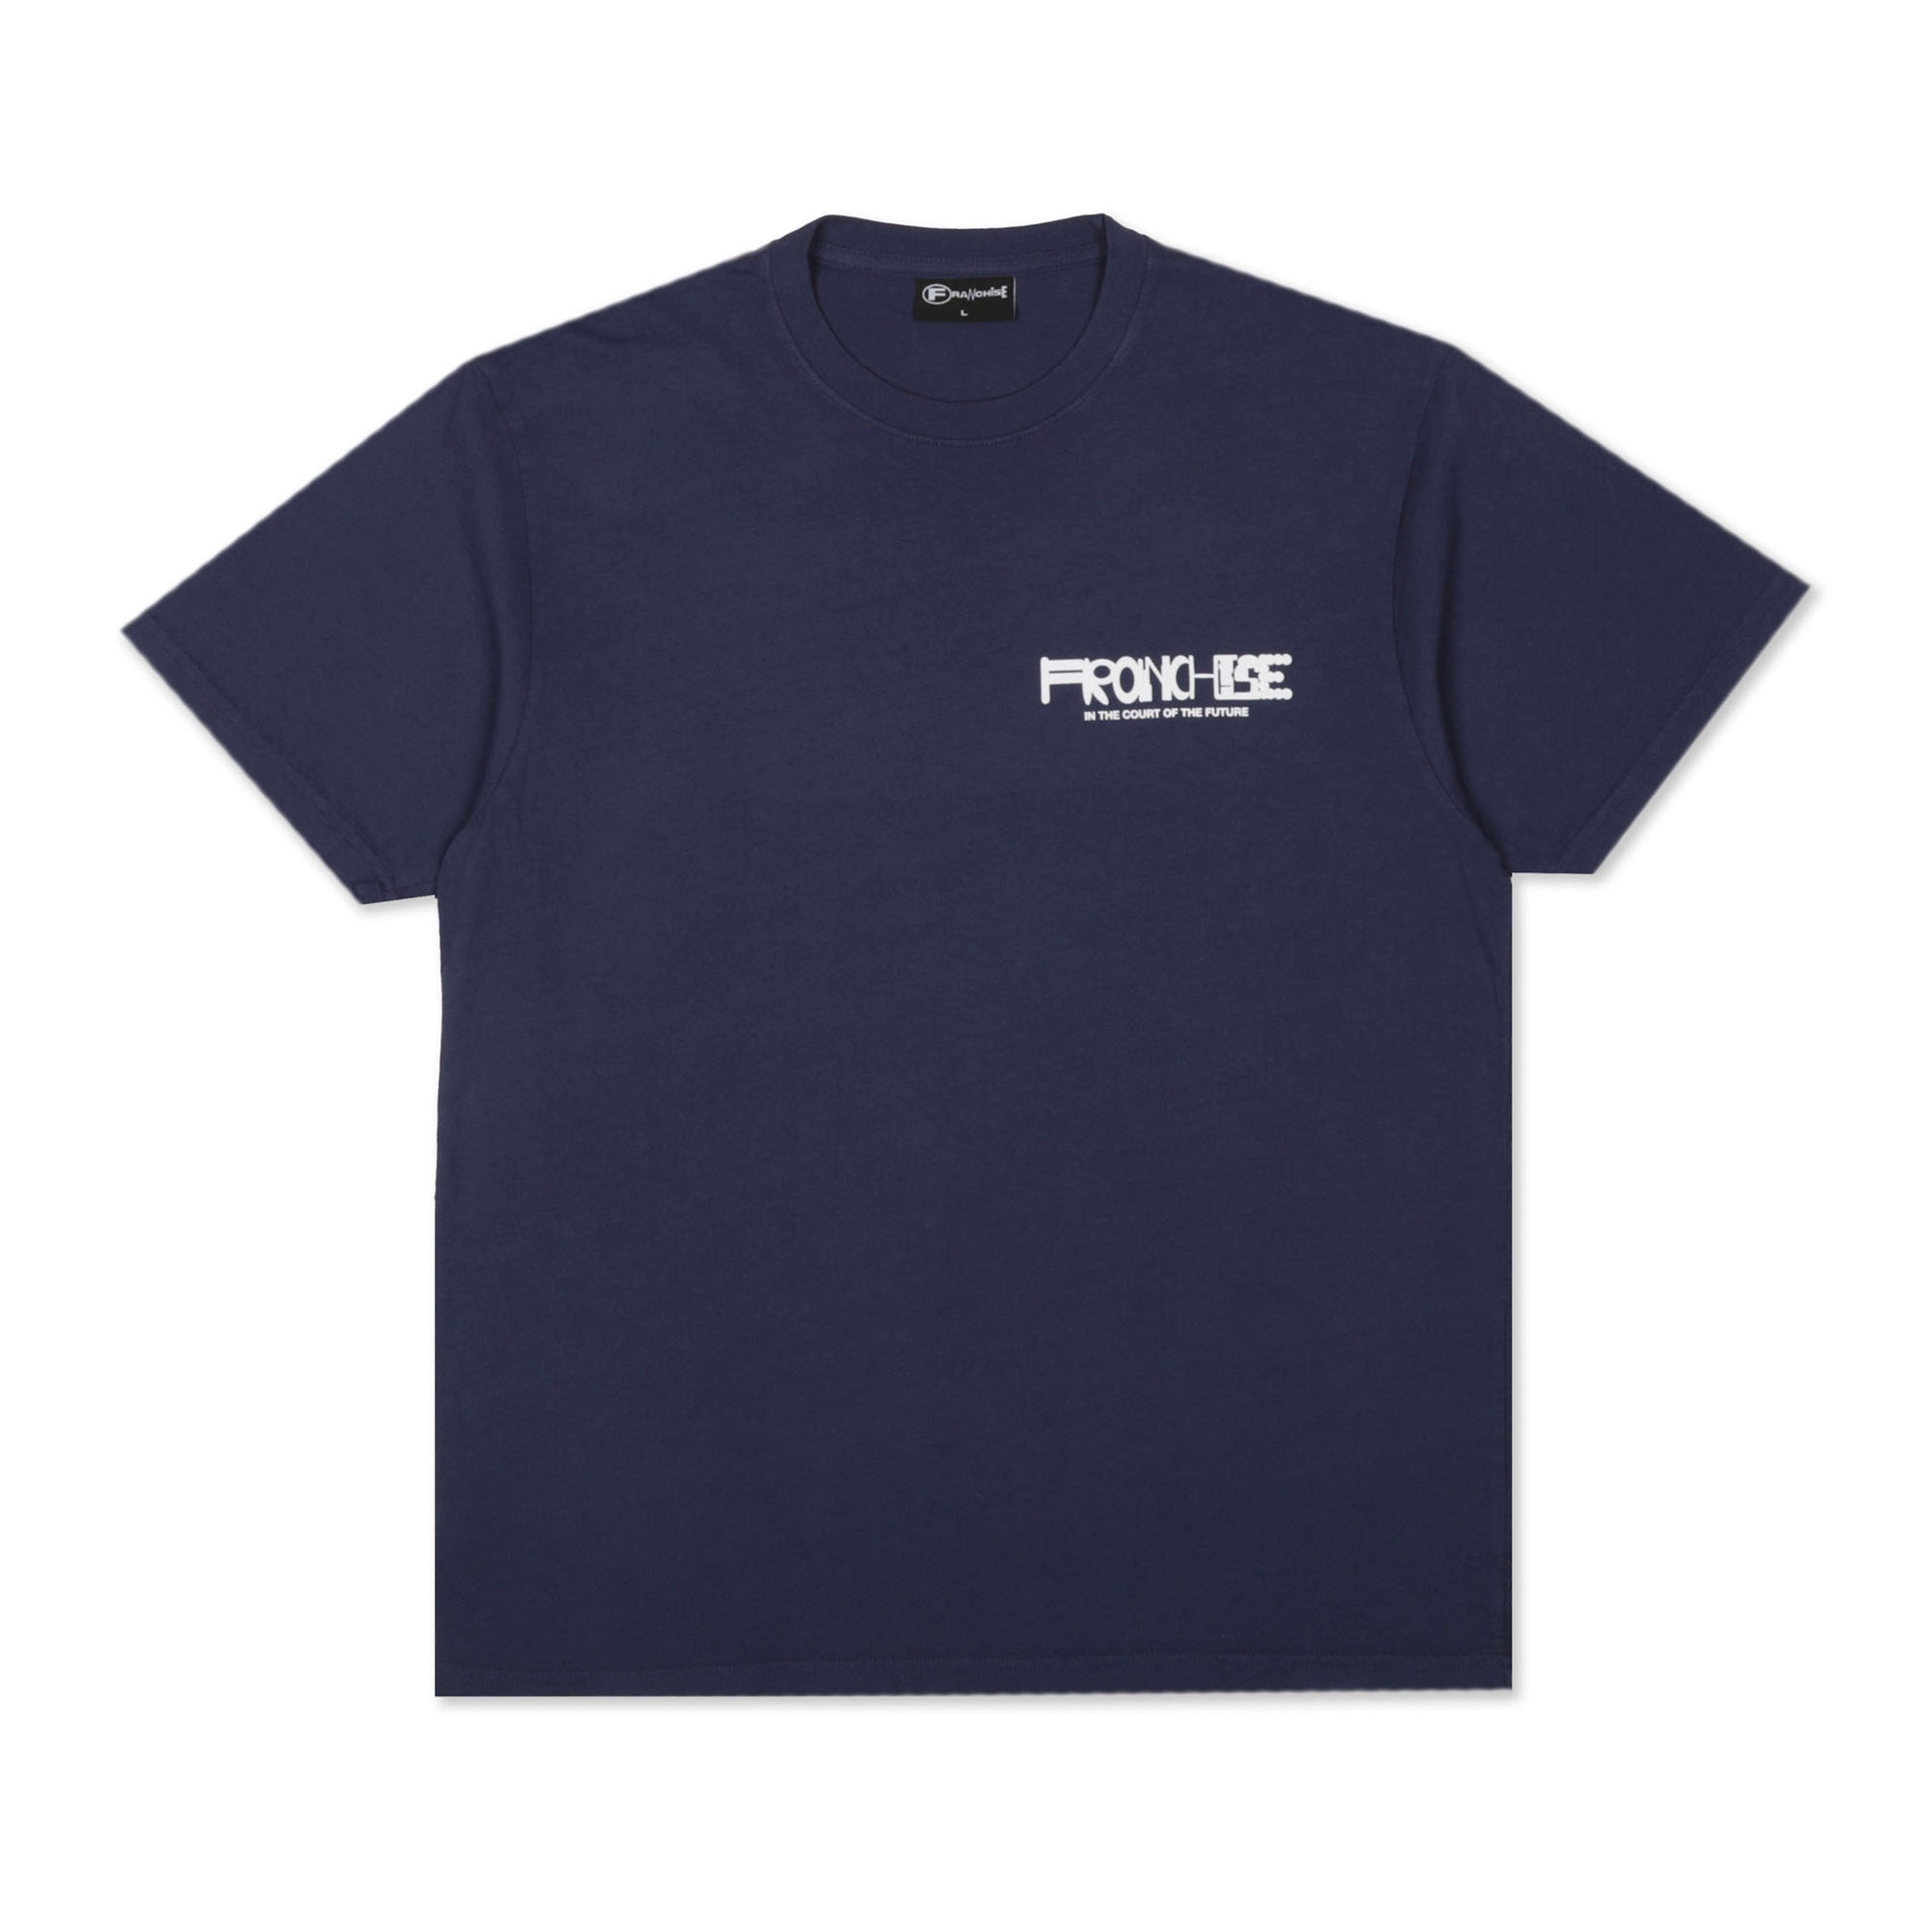 FRANCHISE - Cotf Short Sleeve T-Shirt - (Indigo) view 1